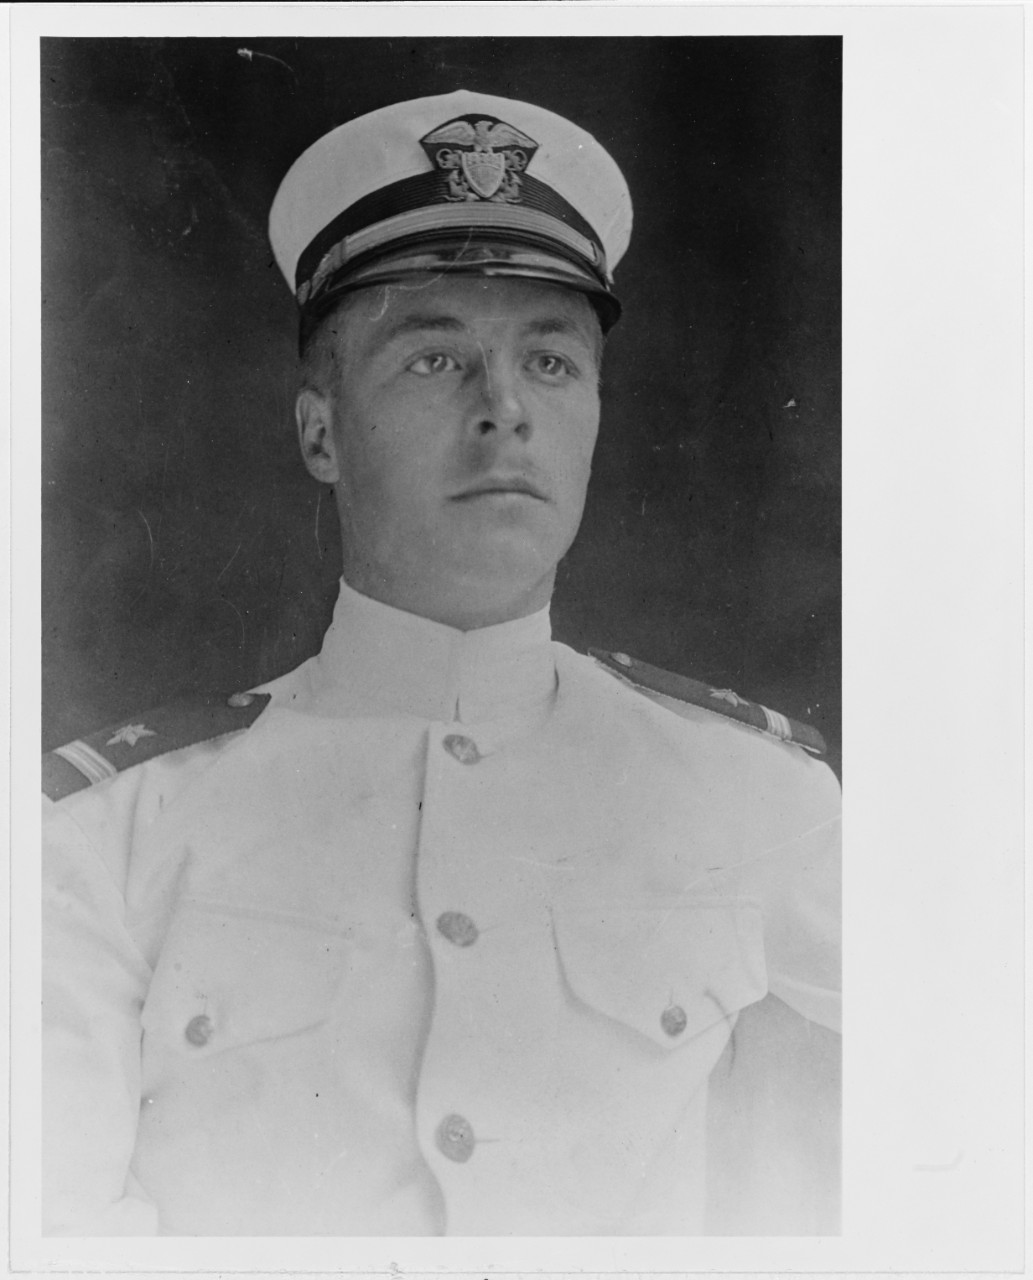 Ensign James M. Cresap, USN.